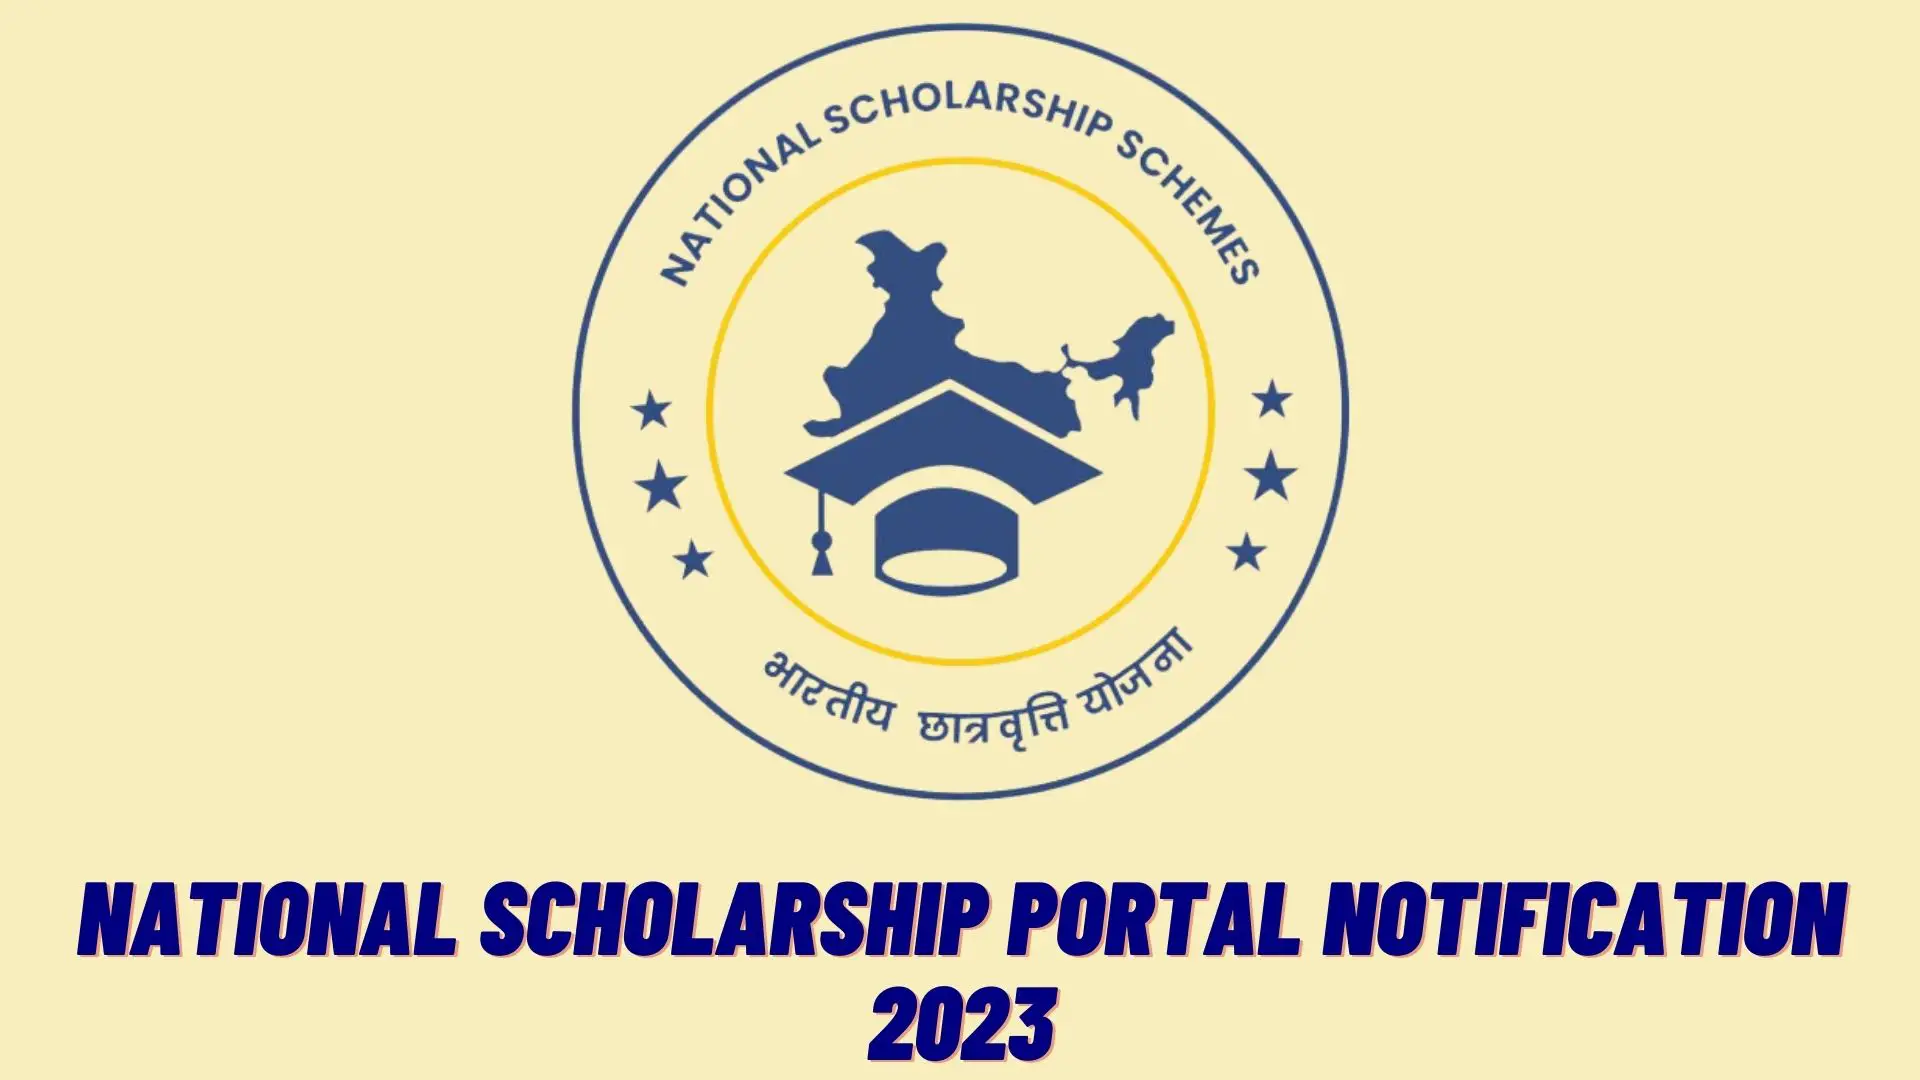 National Scholarship Portal Notification 2023